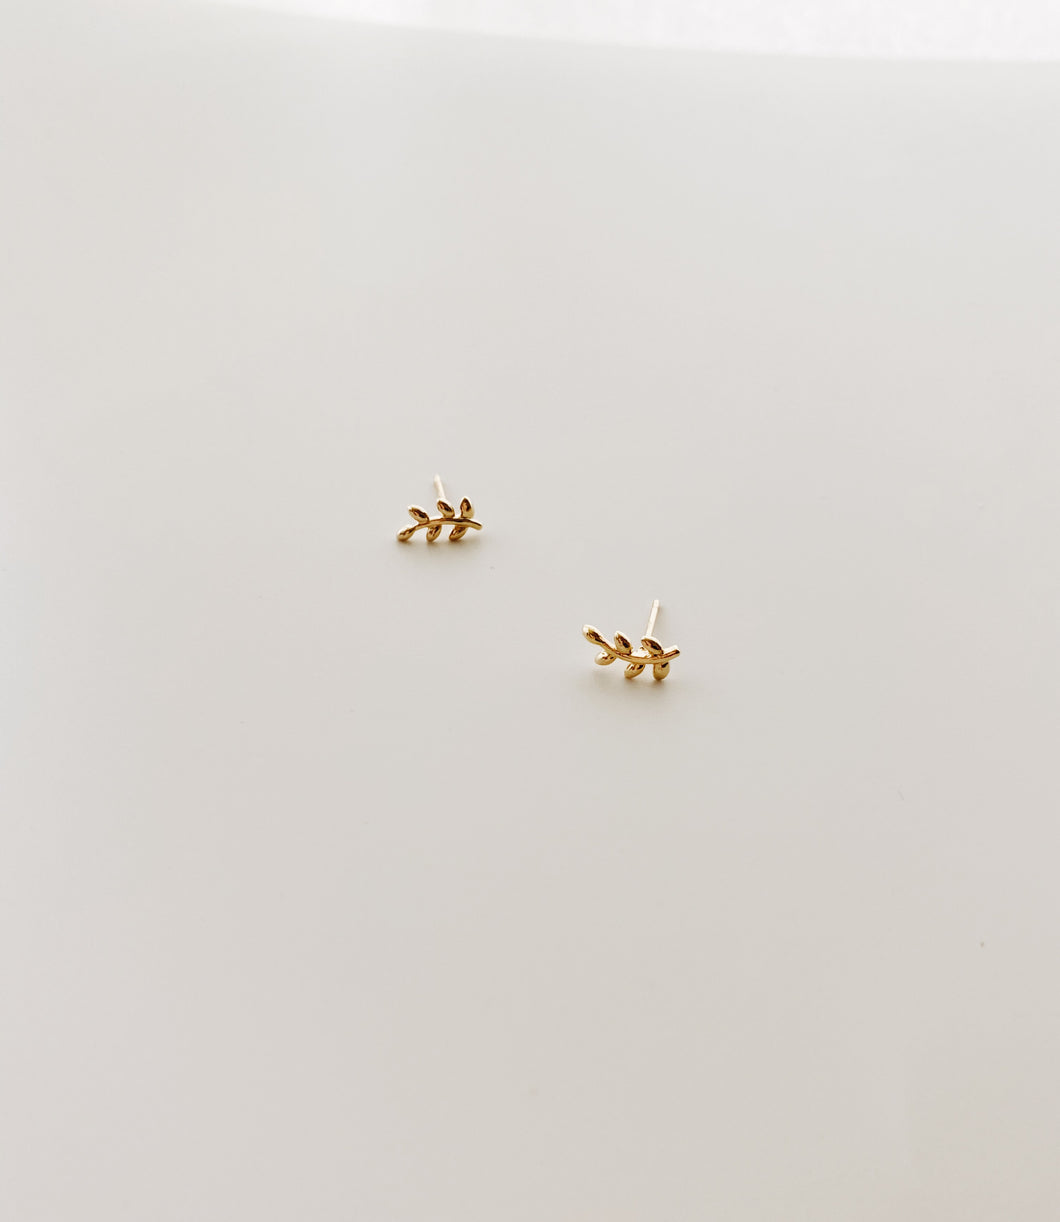 Gold branch w/ leaves stud earrings - S925 sterling silver